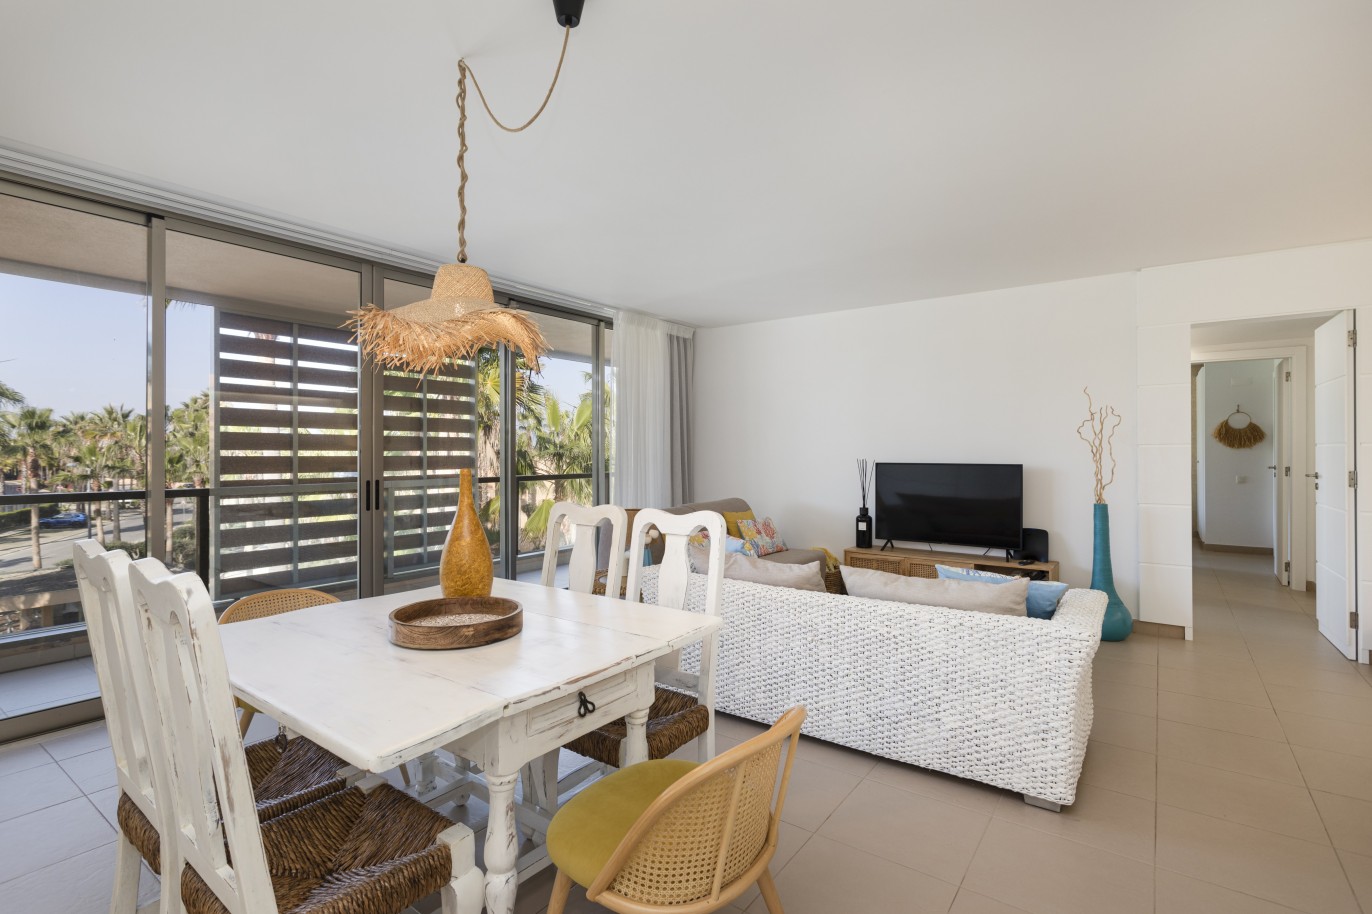 2-bedroom flat for sale in private condominium in Salgados, Algarve_253489